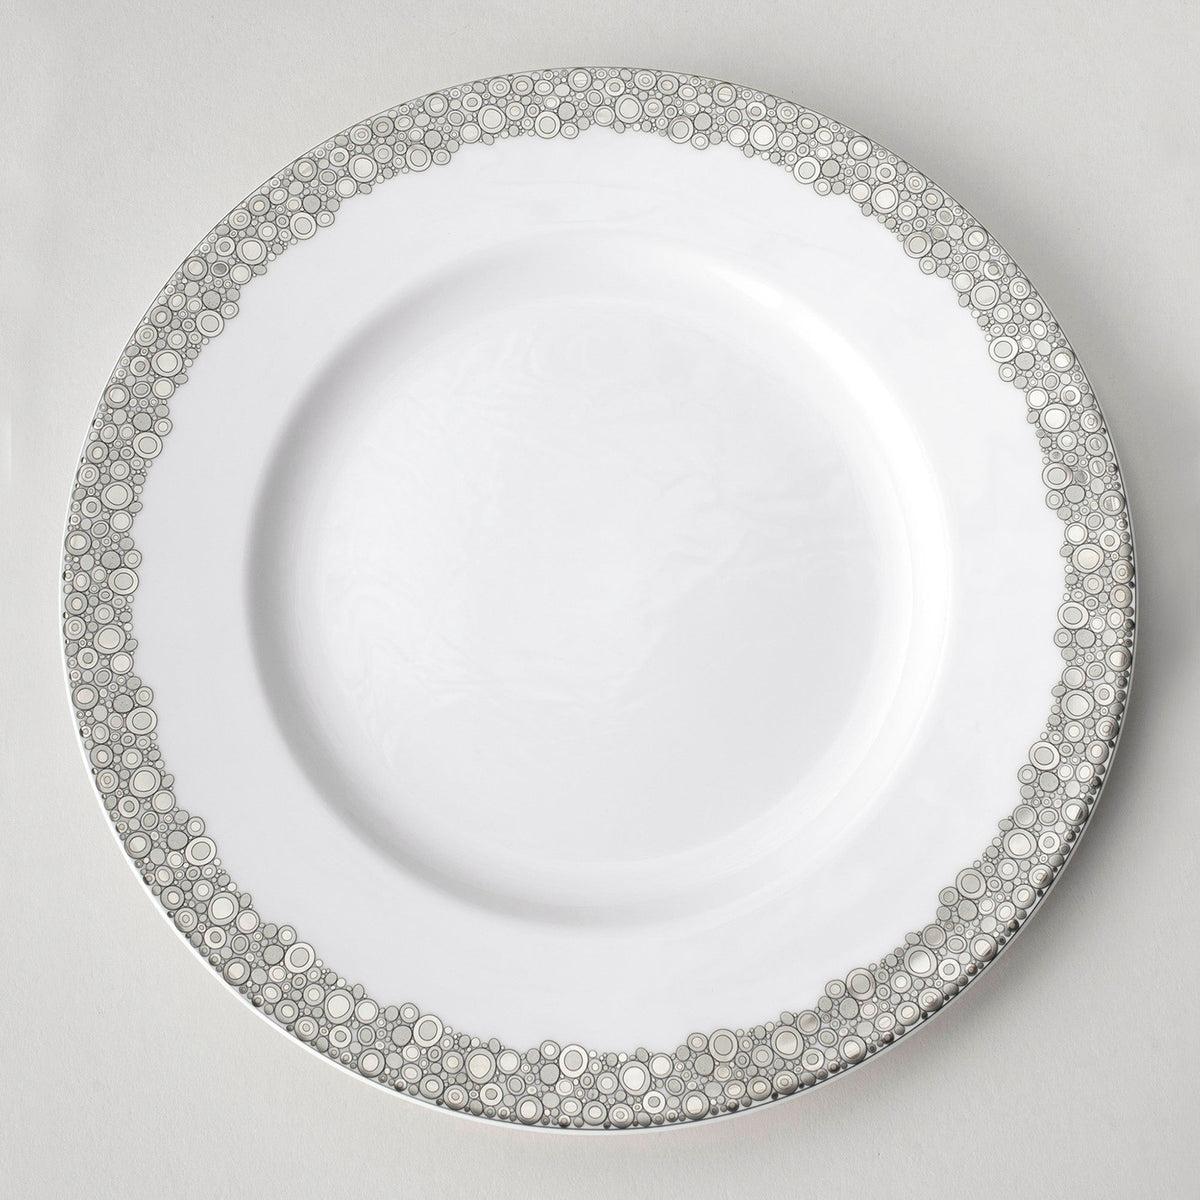 An Ellington Shine Platinum Simple dinner plate with a silver trim from Caskata Artisanal Home.